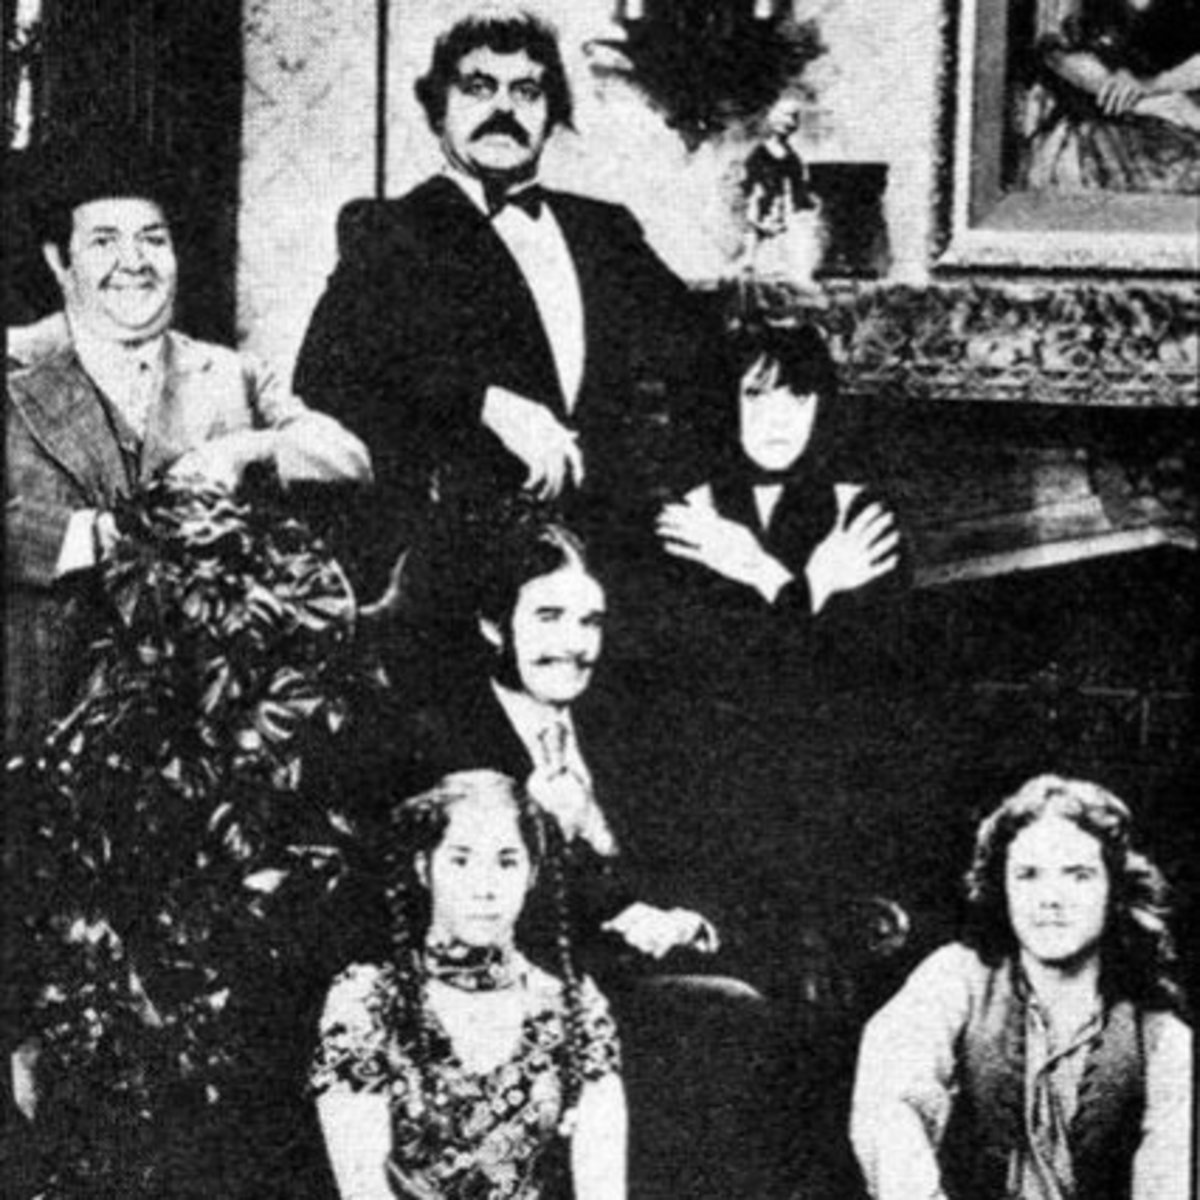 The Addams Family Fun House